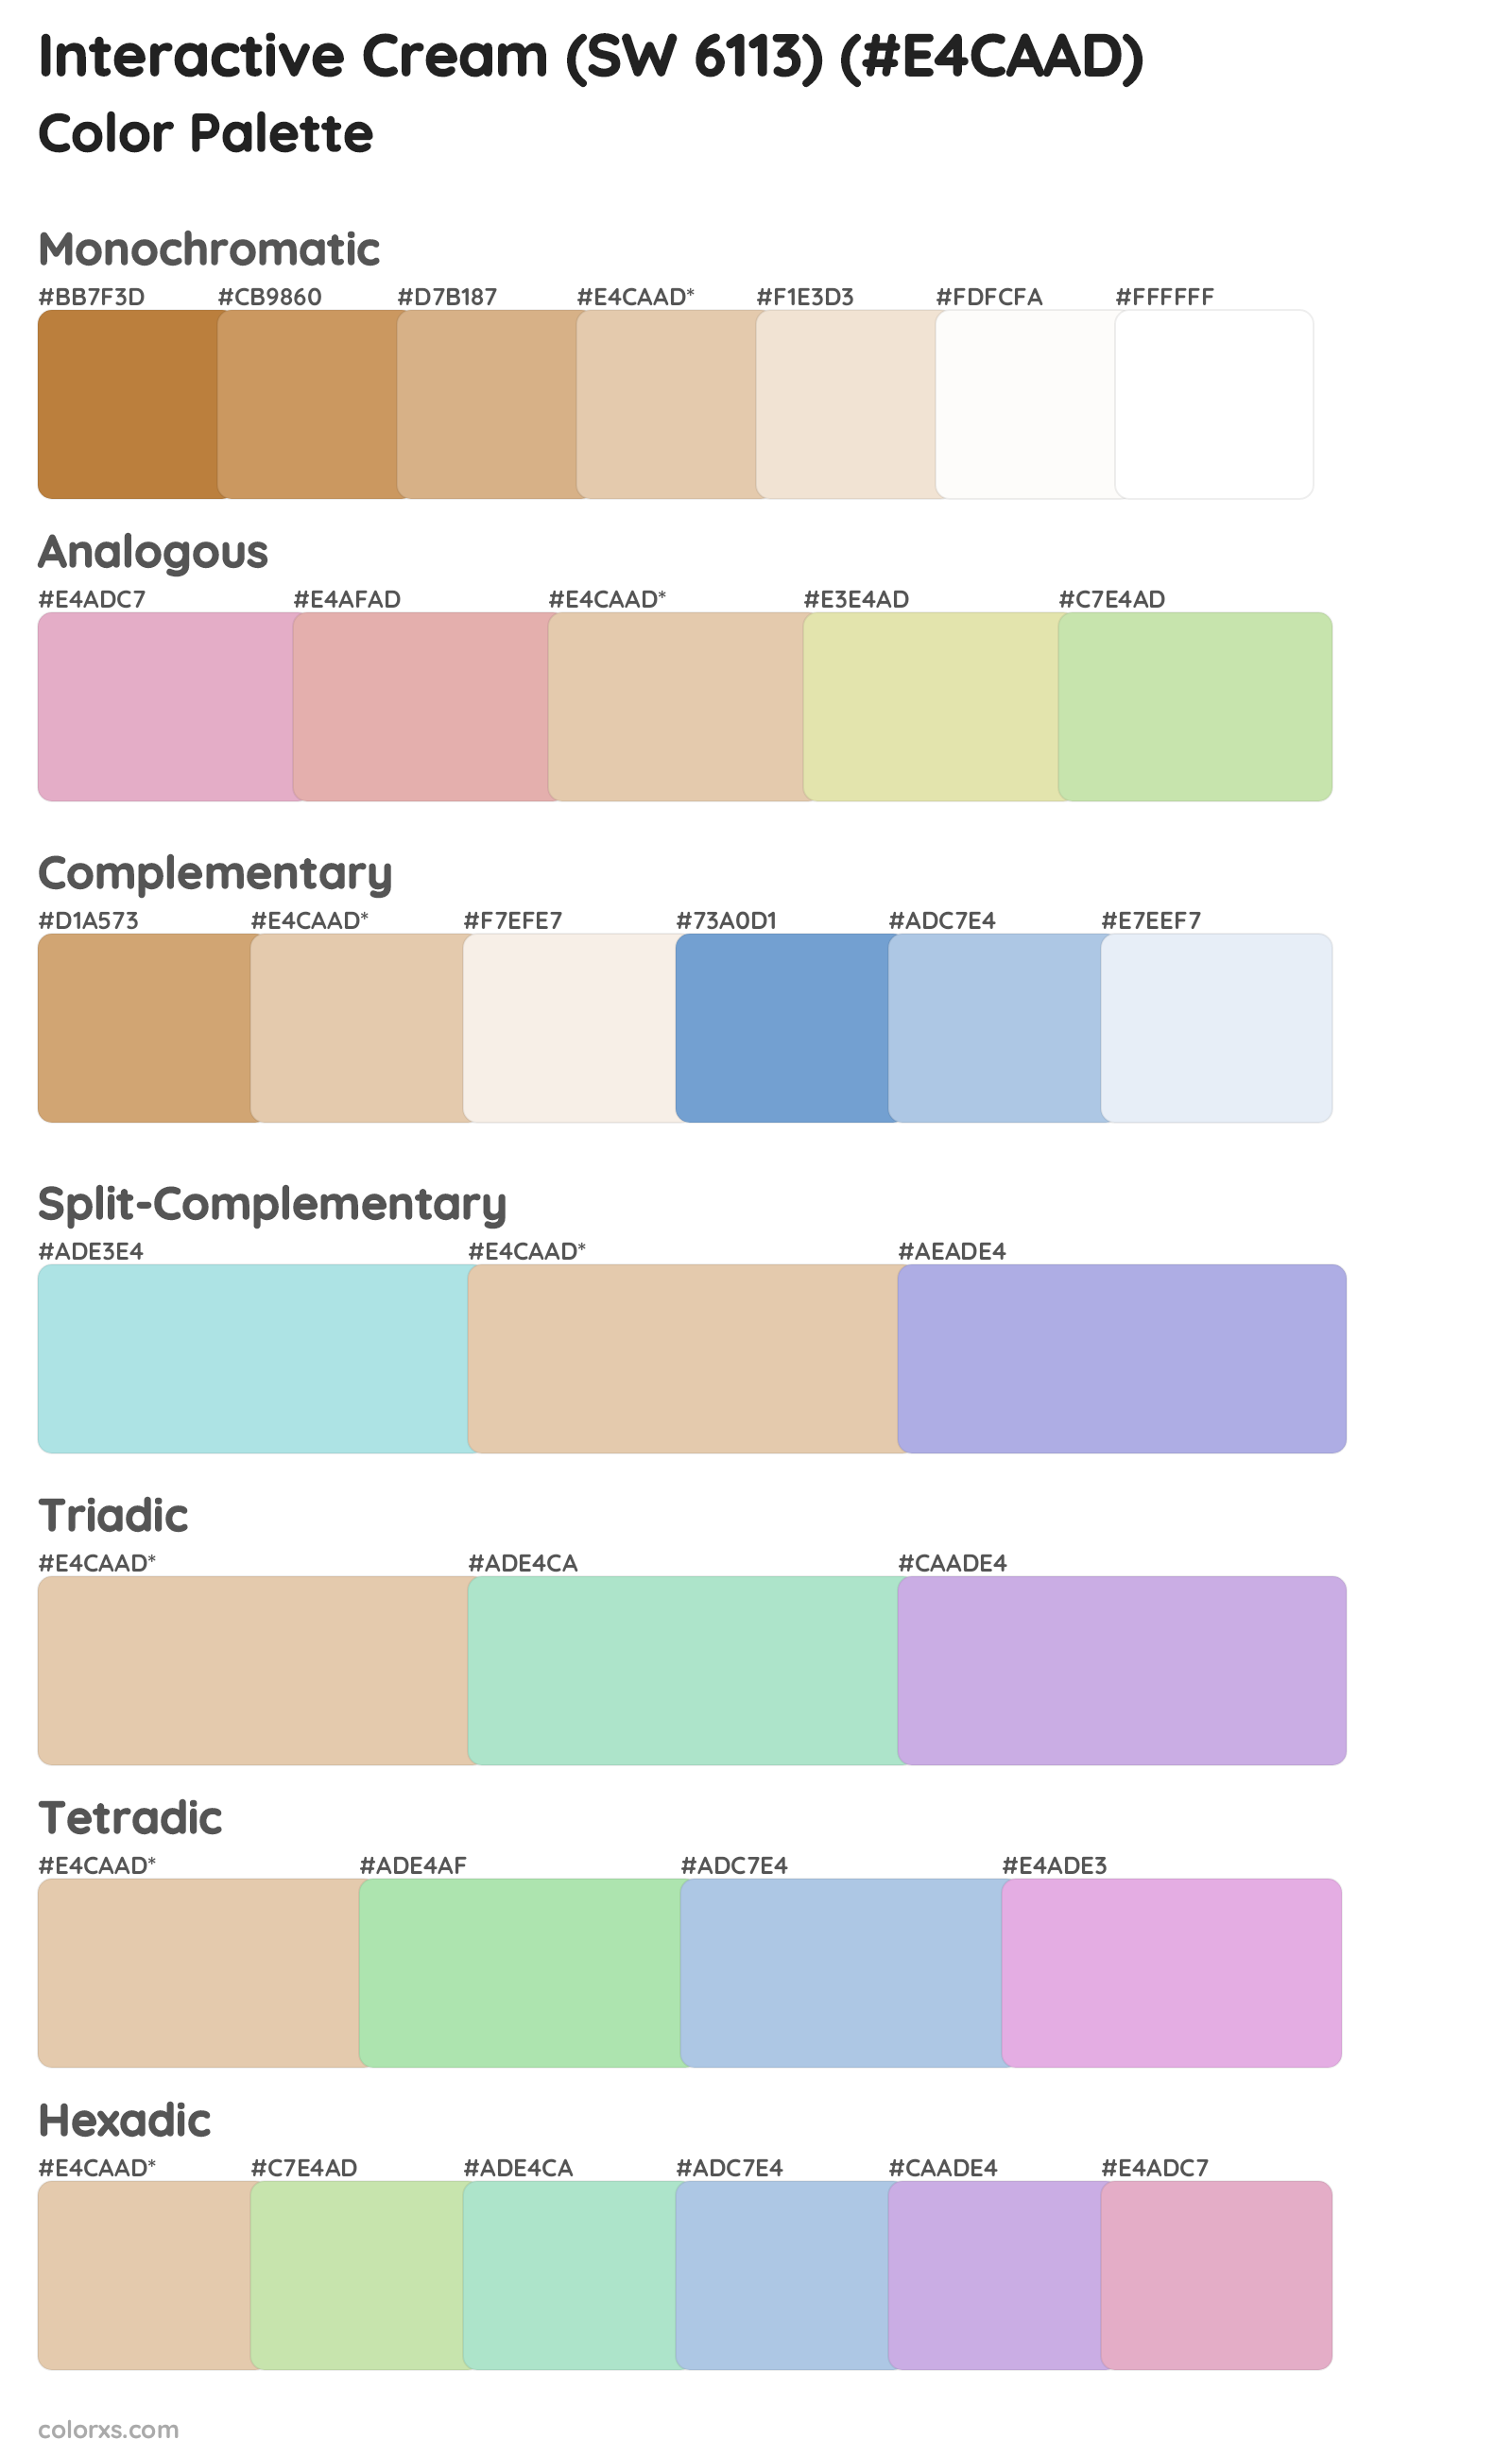 Interactive Cream (SW 6113) Color Scheme Palettes